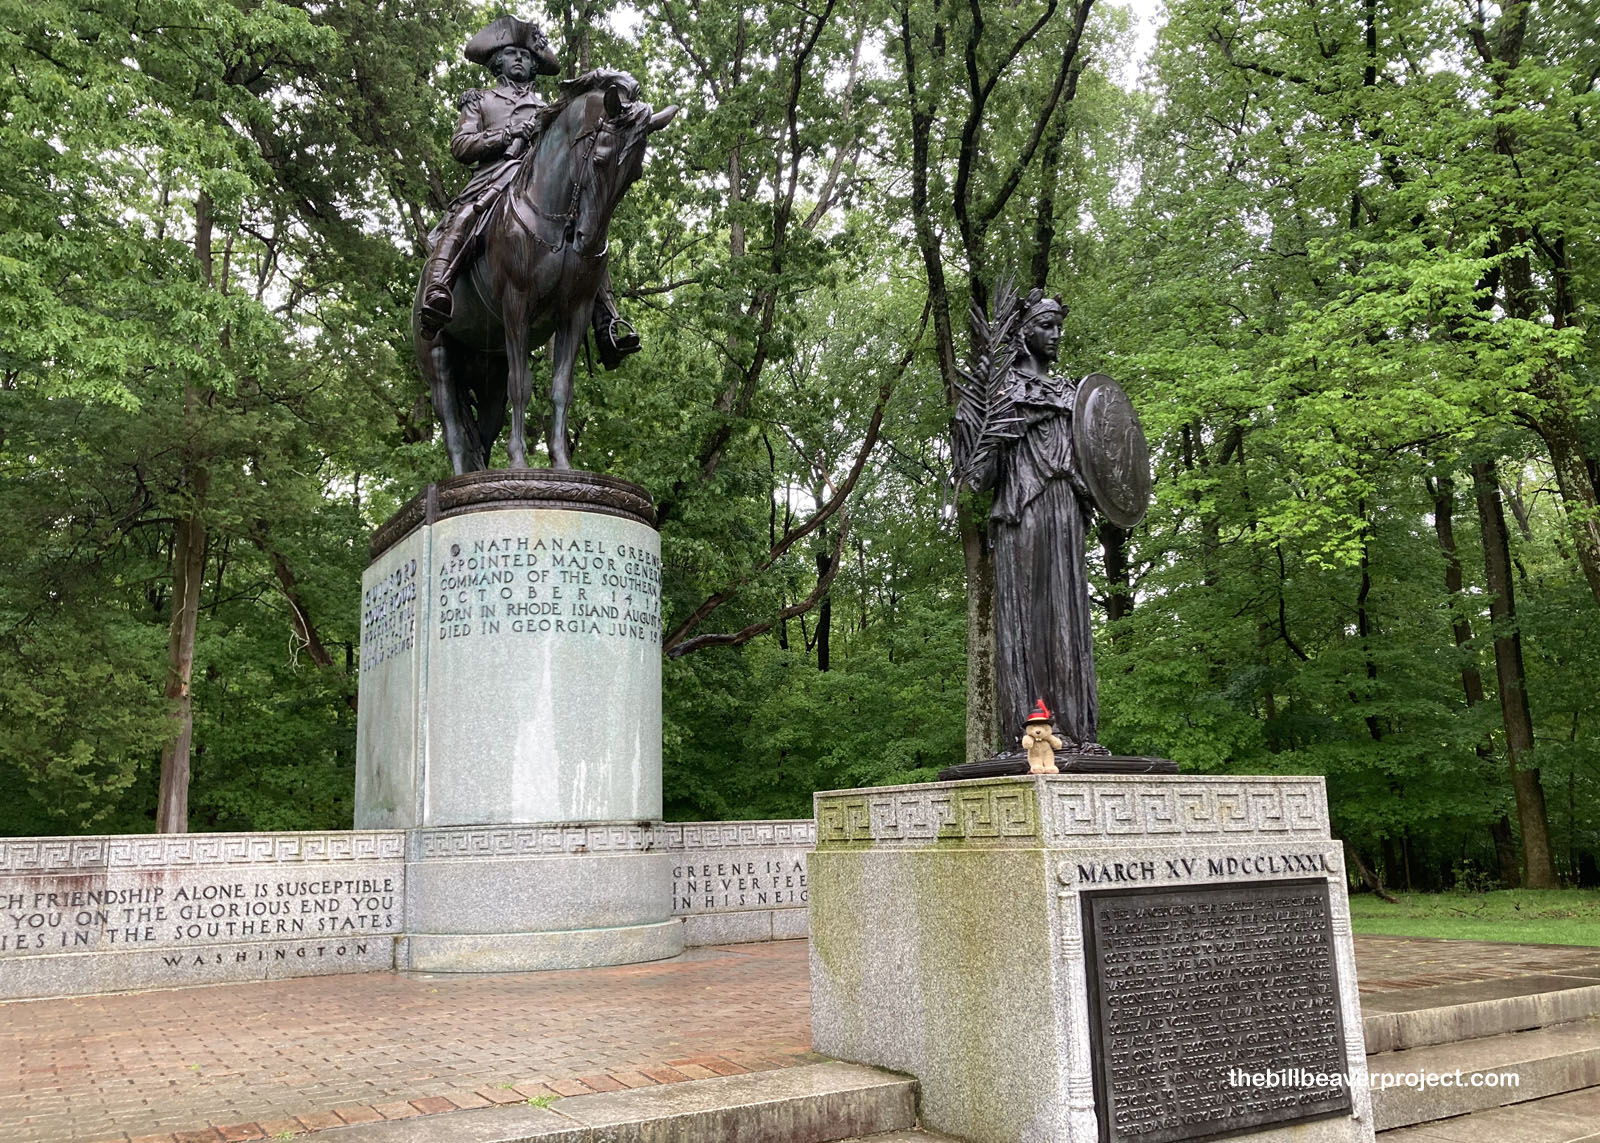 A grand memorial for General Nathanael Greene!